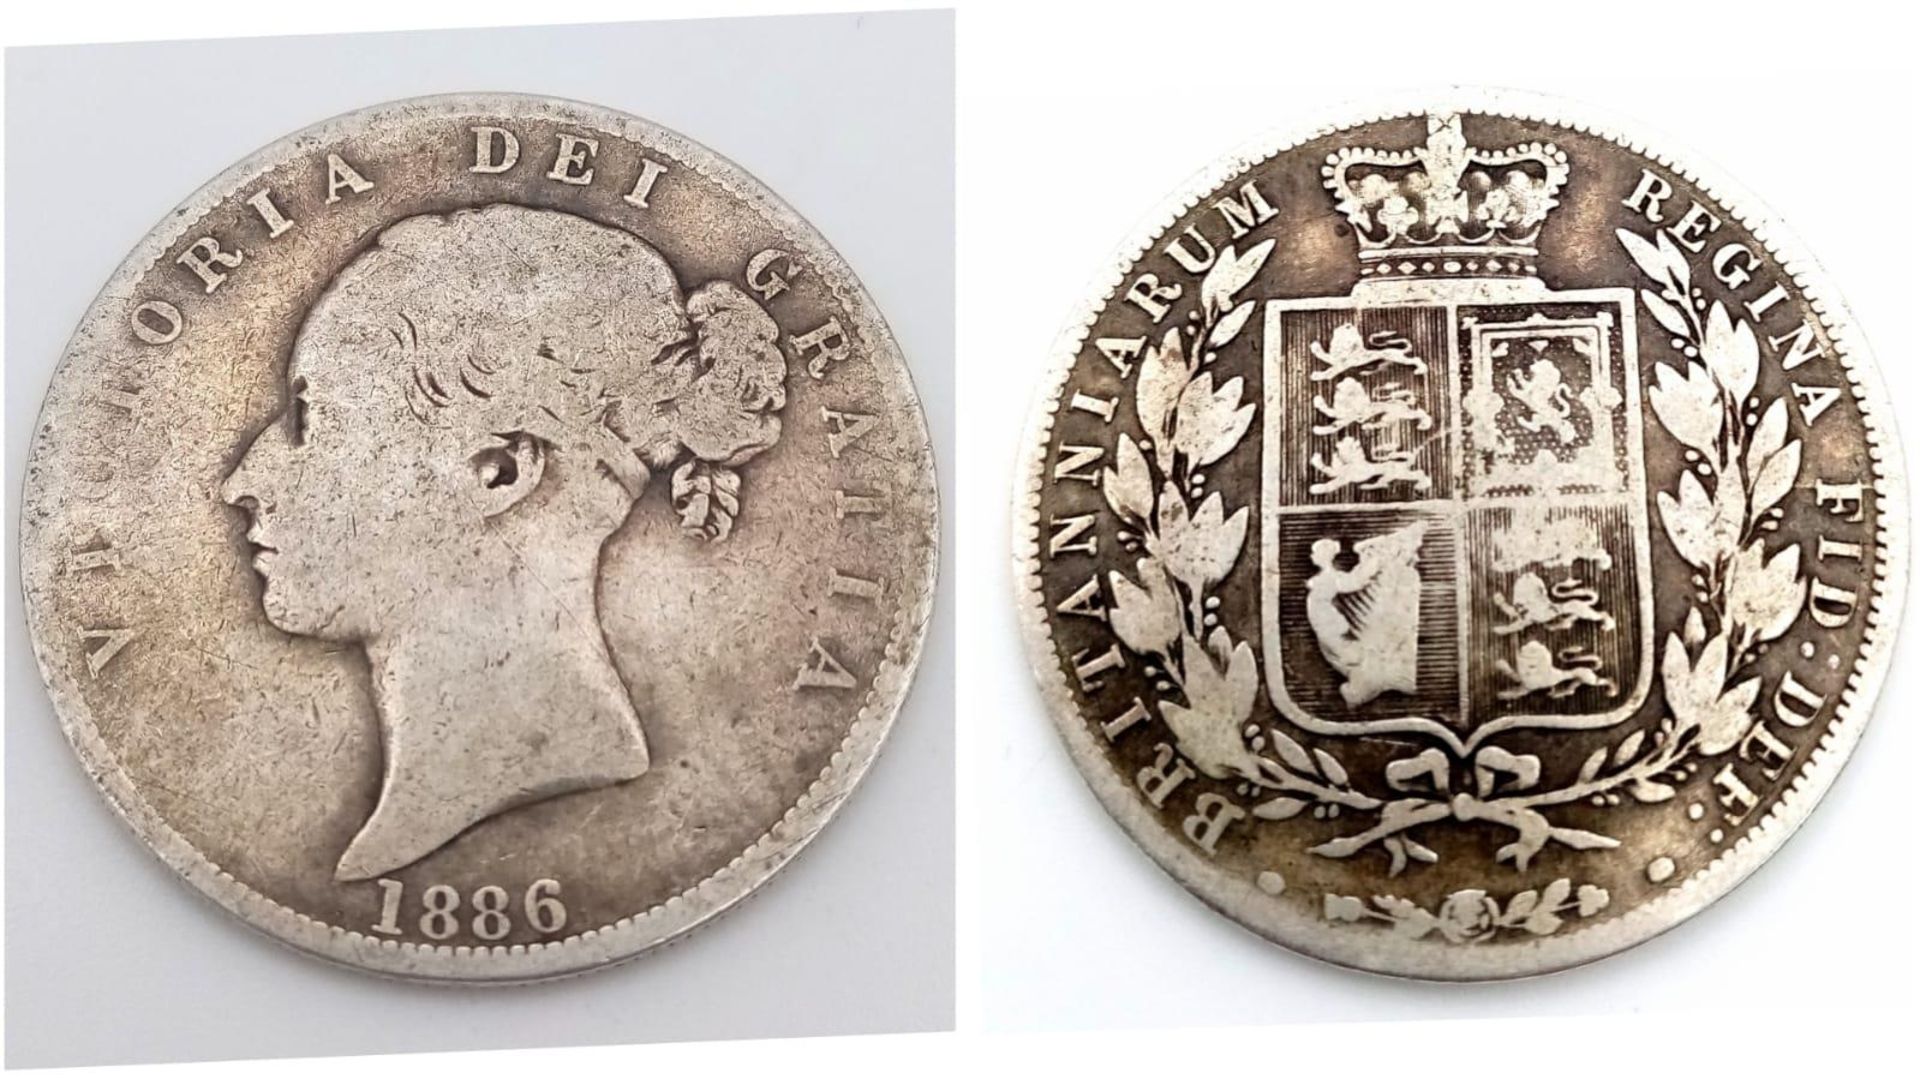 A Very Good Condition 1886 Queen Victoria Young Head Half Crown Coin. 13.55 Grams